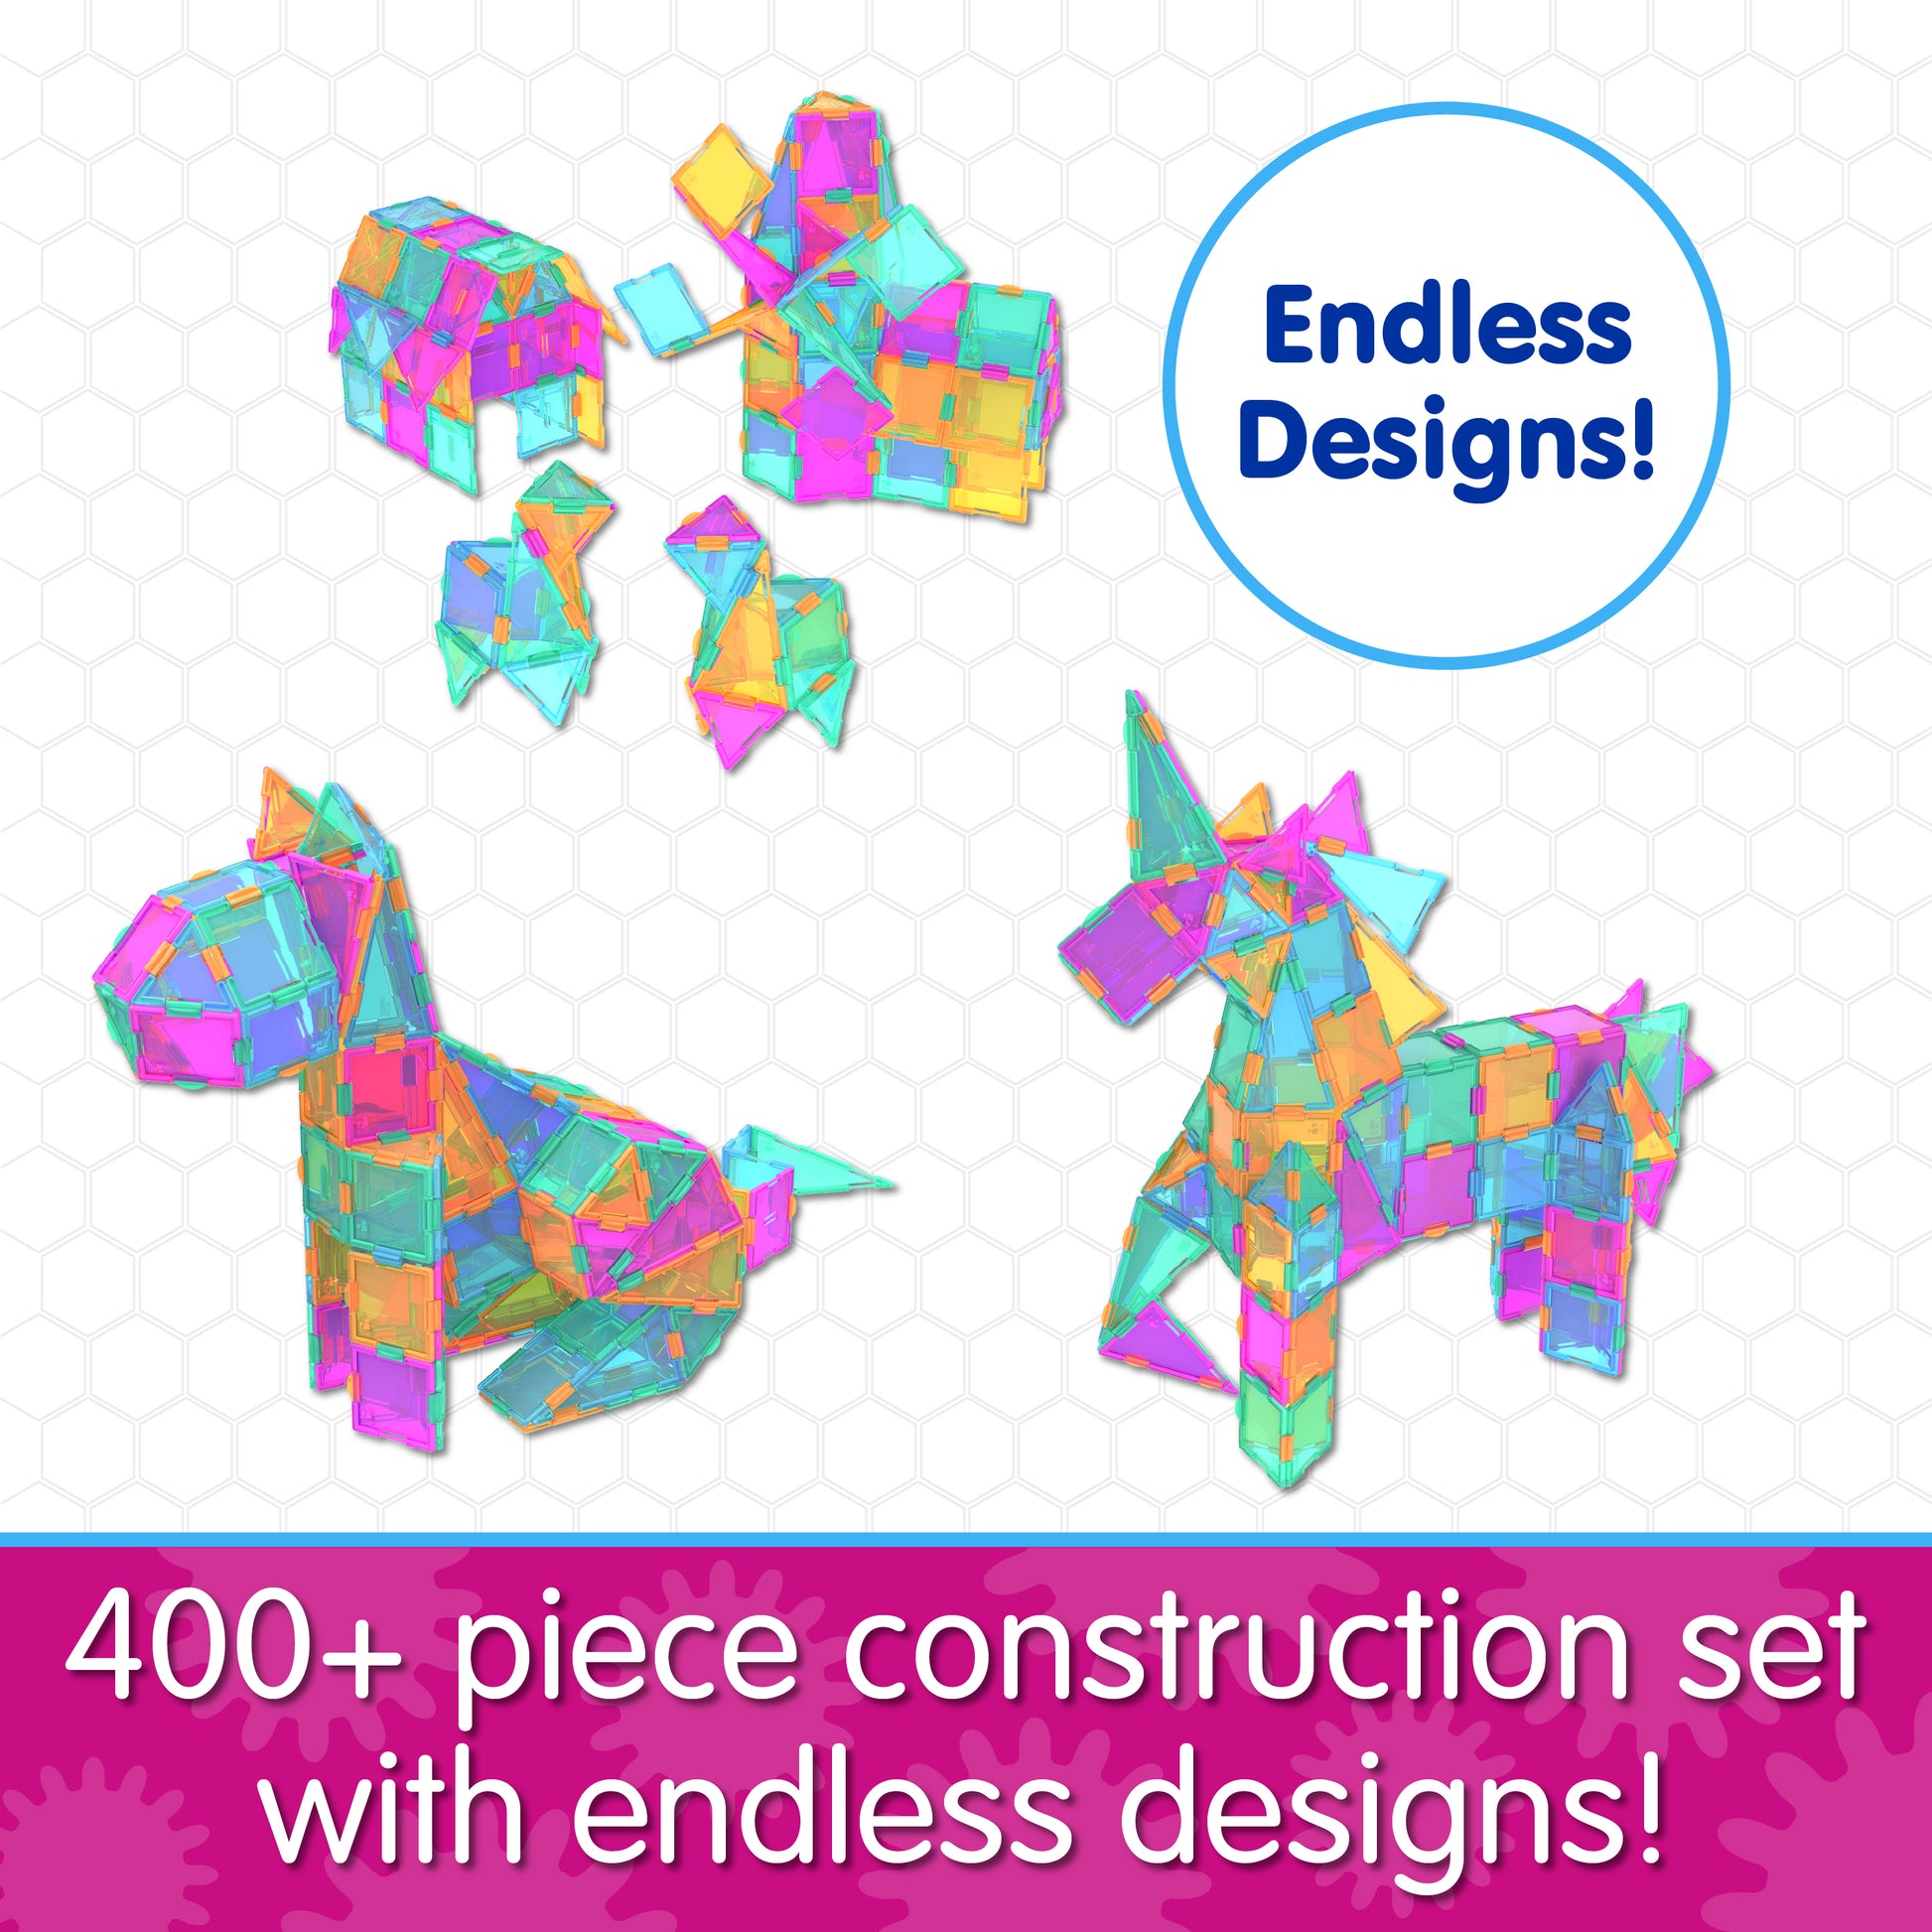 Infographic about Techno Tiles Super Set that says, "400+ piece construction set with endless design!"